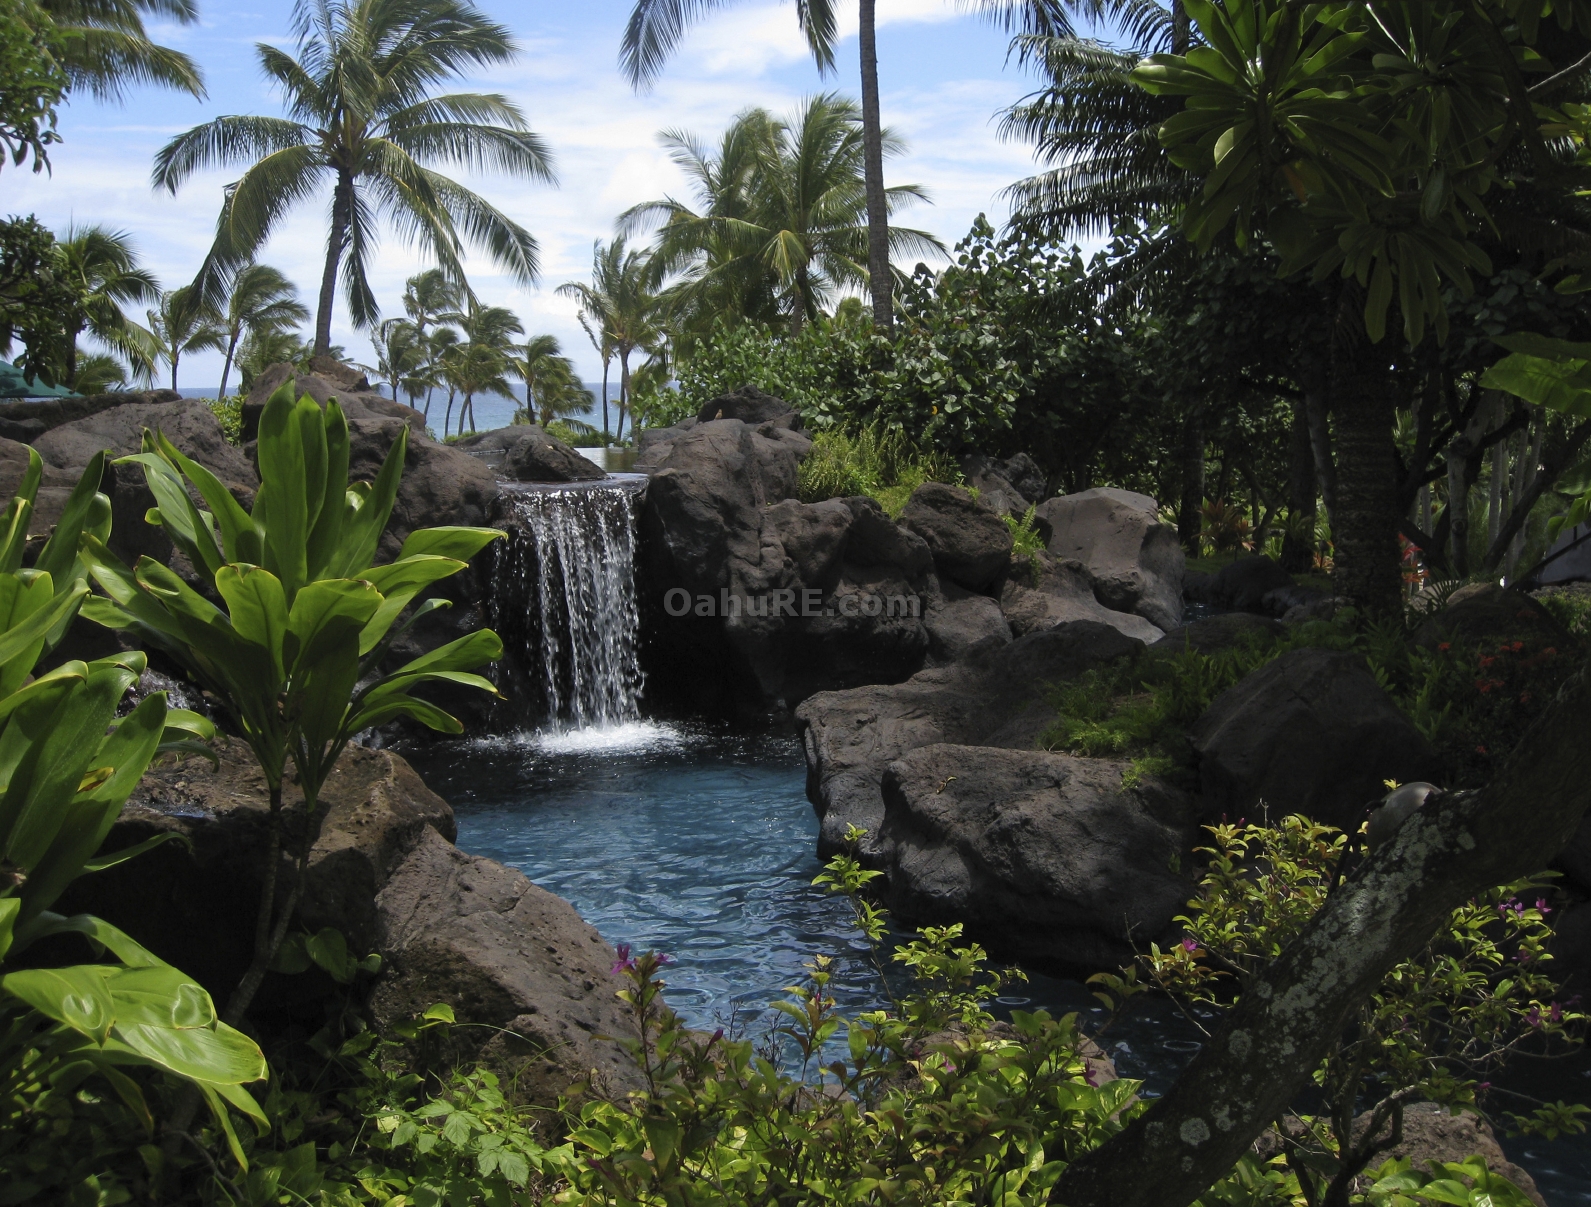 Waterfall on Oahu